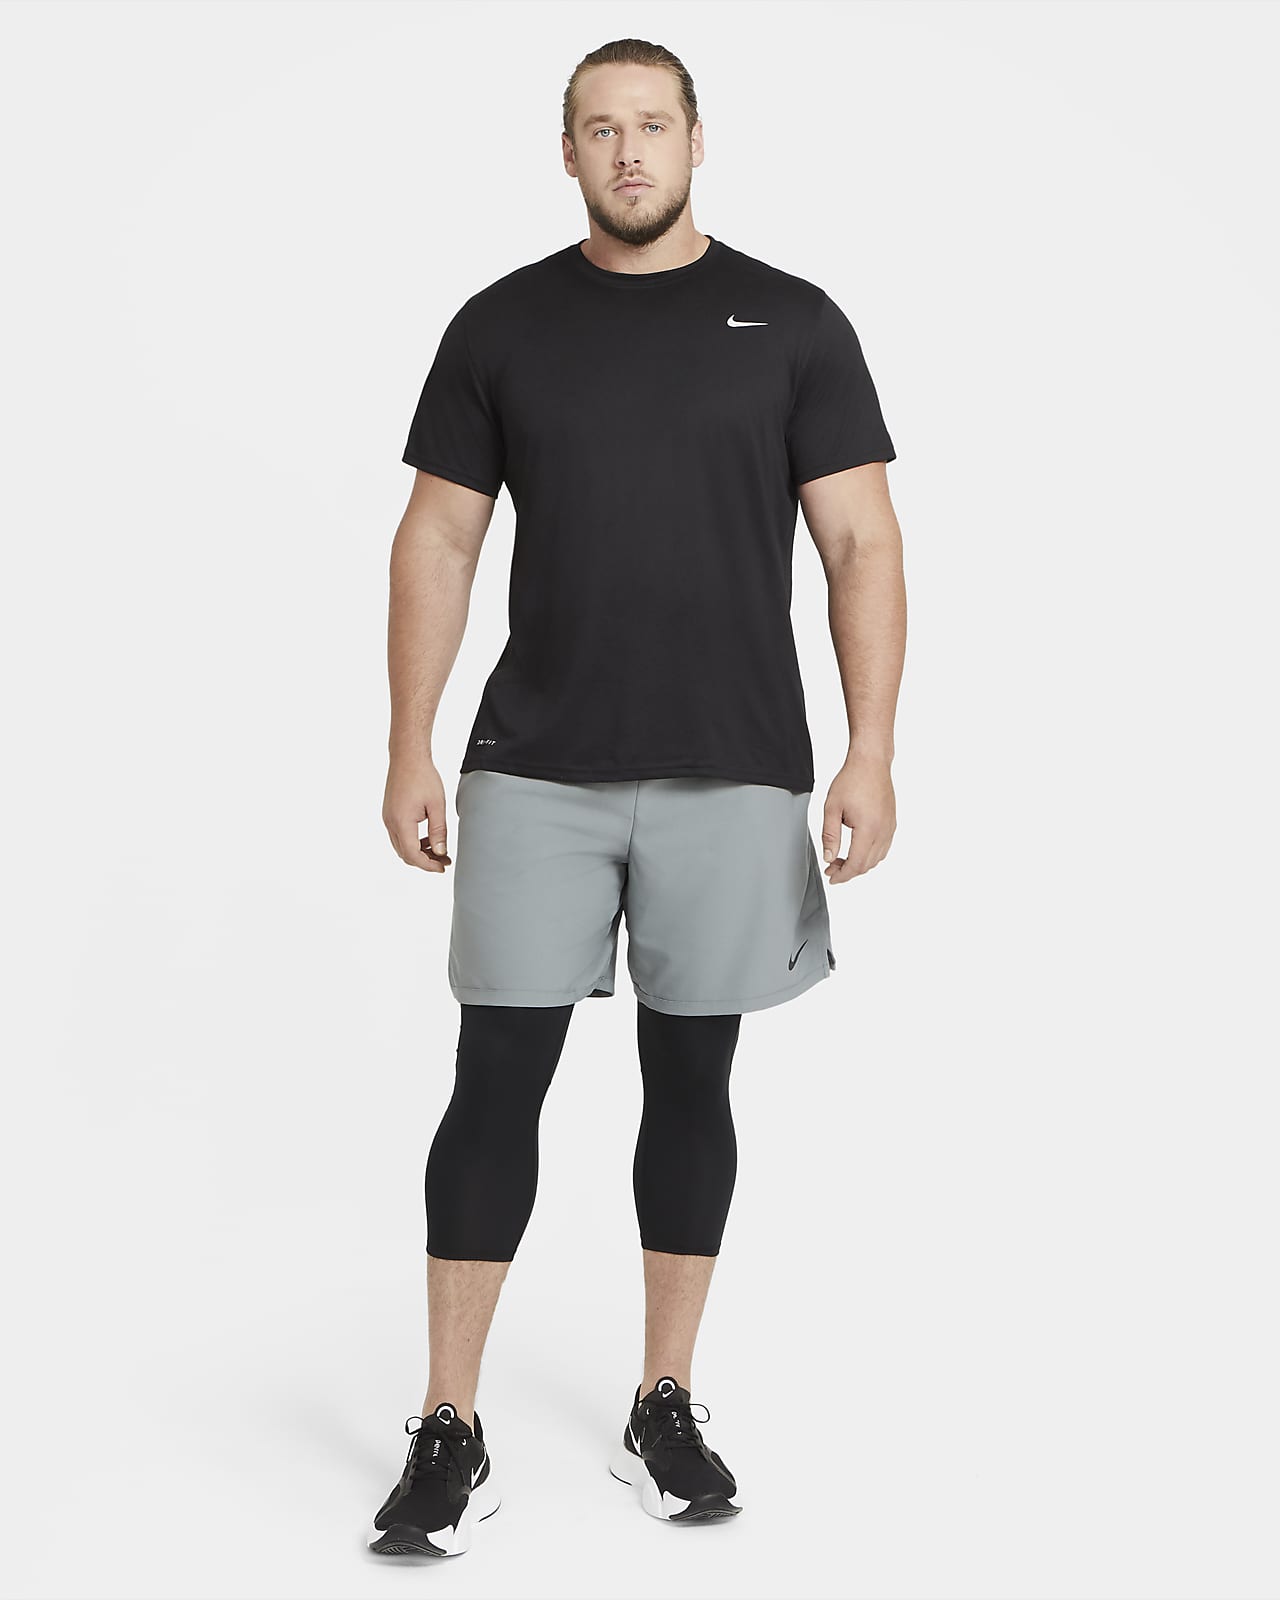 Nike公式 ナイキ プロ メンズ 3 4 タイツ オンラインストア 通販サイト